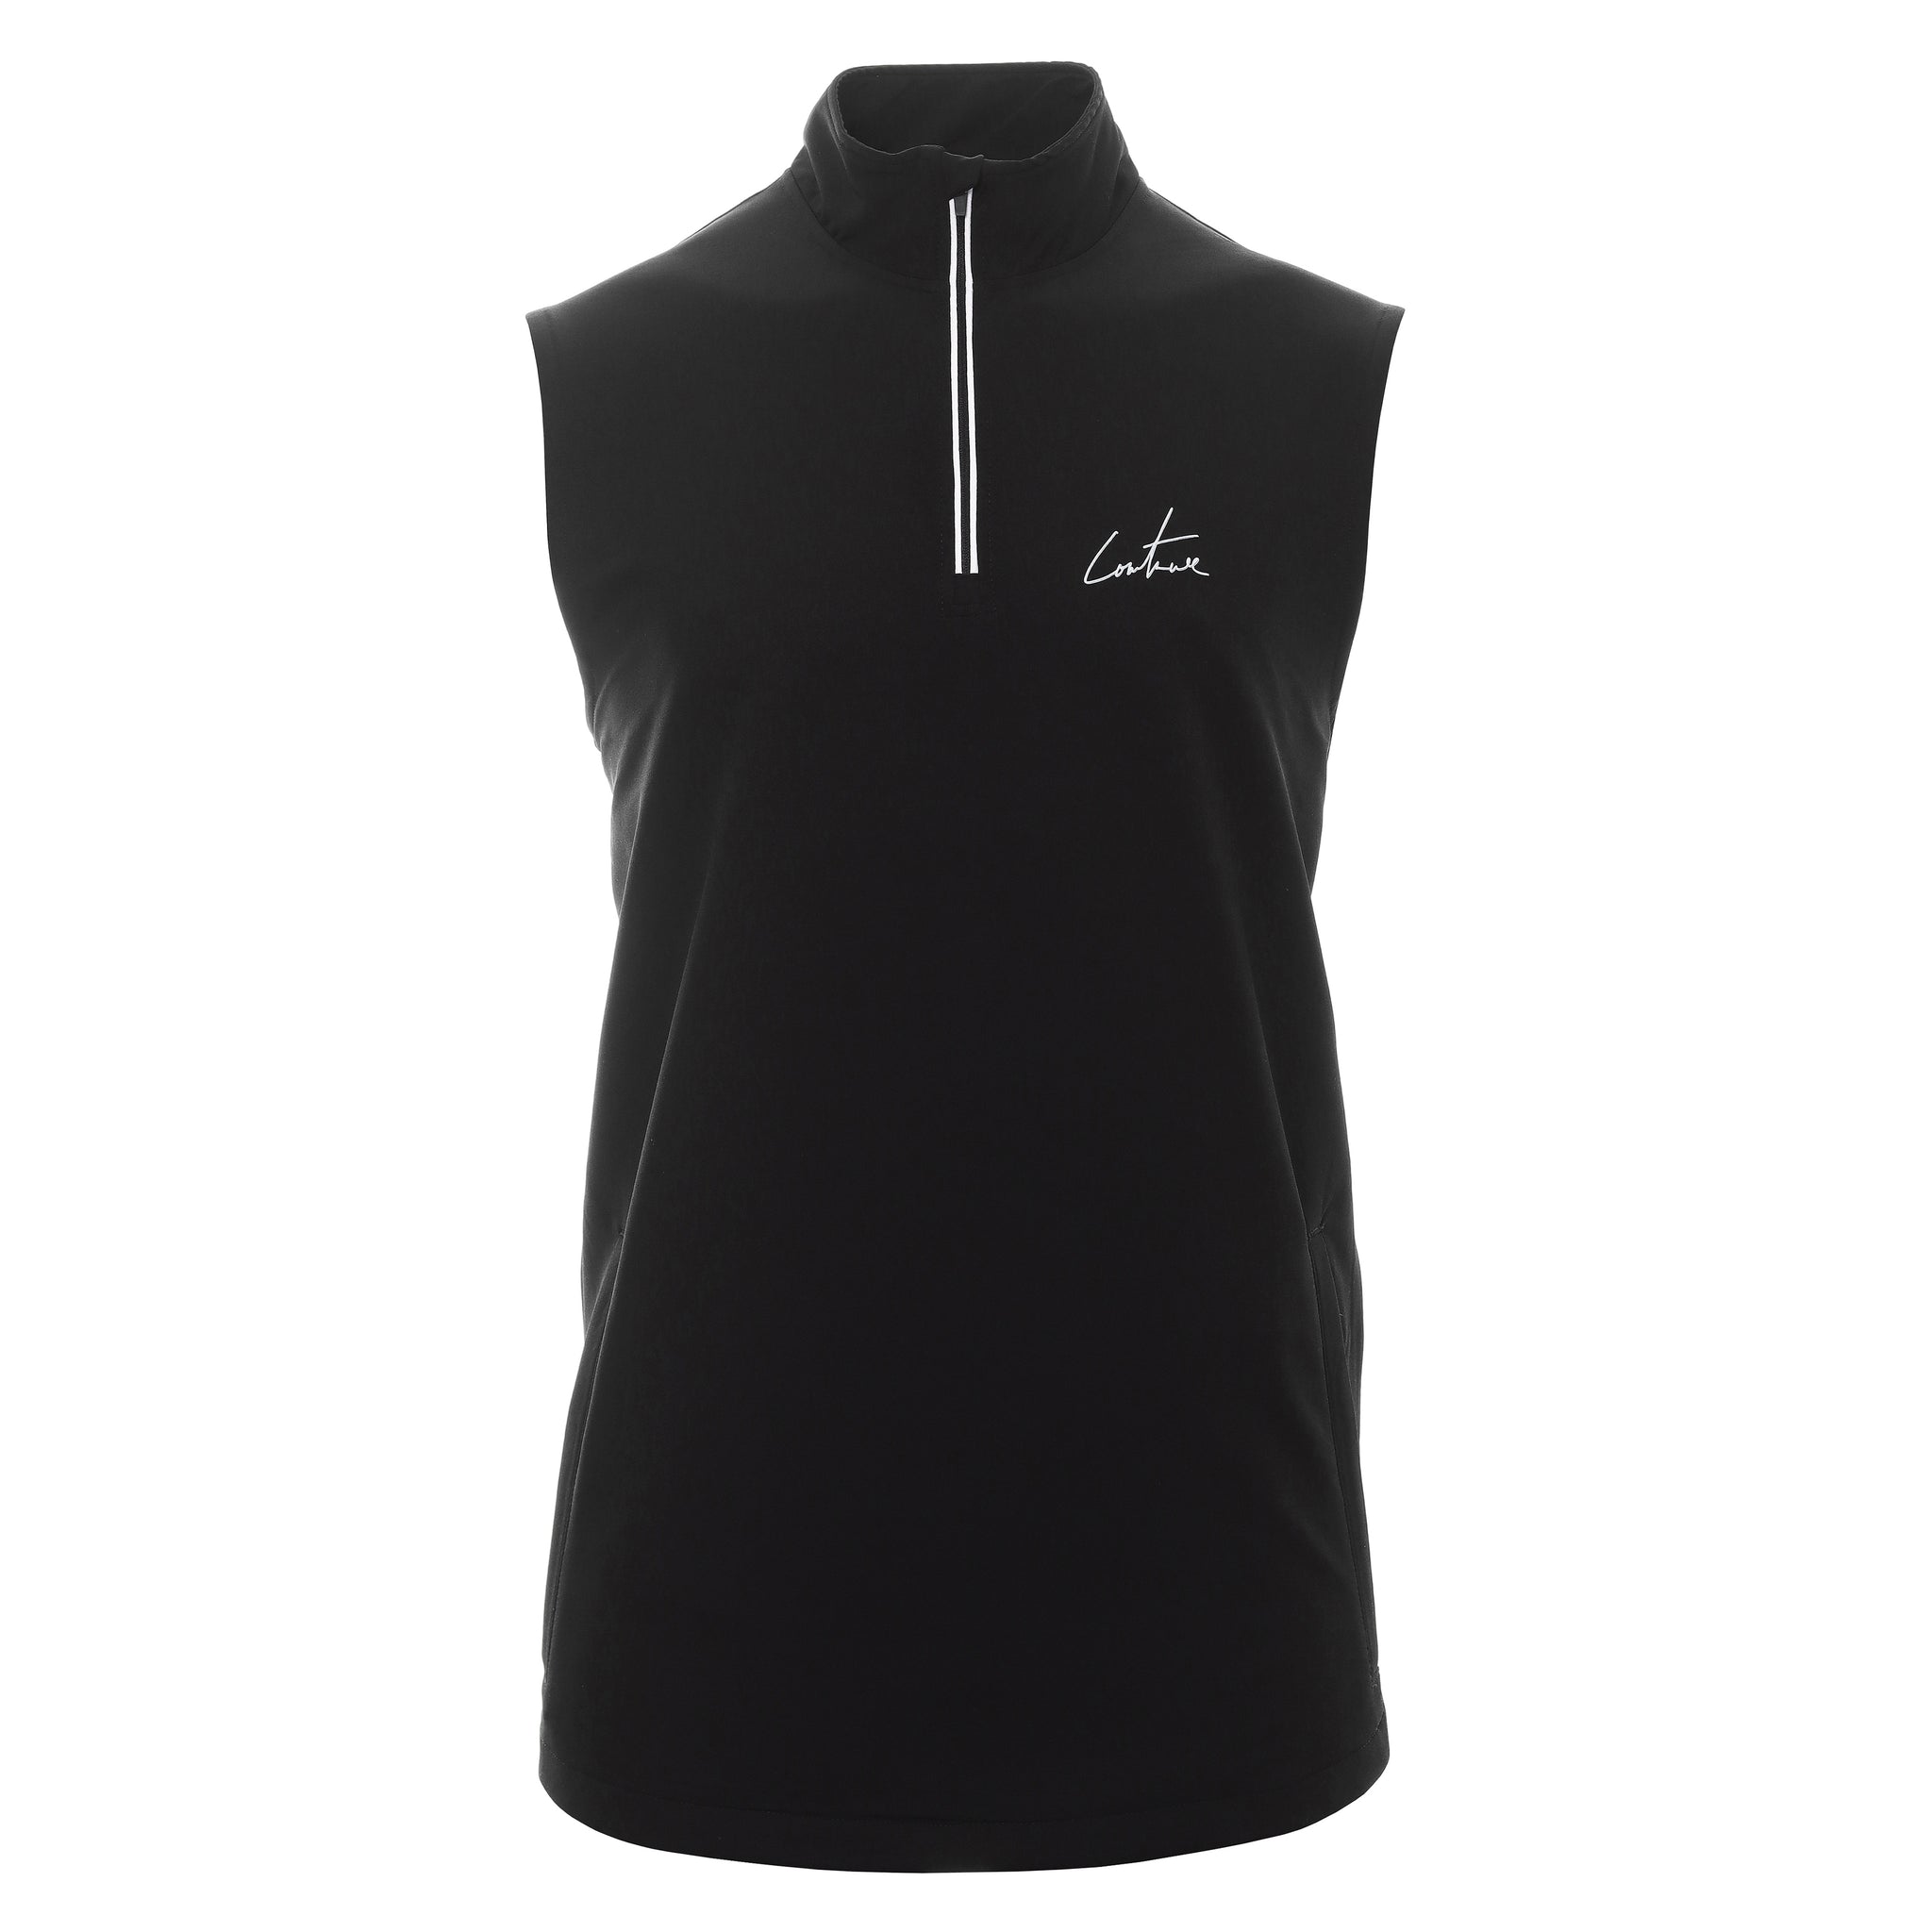 couture-club-golf-1-4-zip-shell-gilet-tccm1988-black